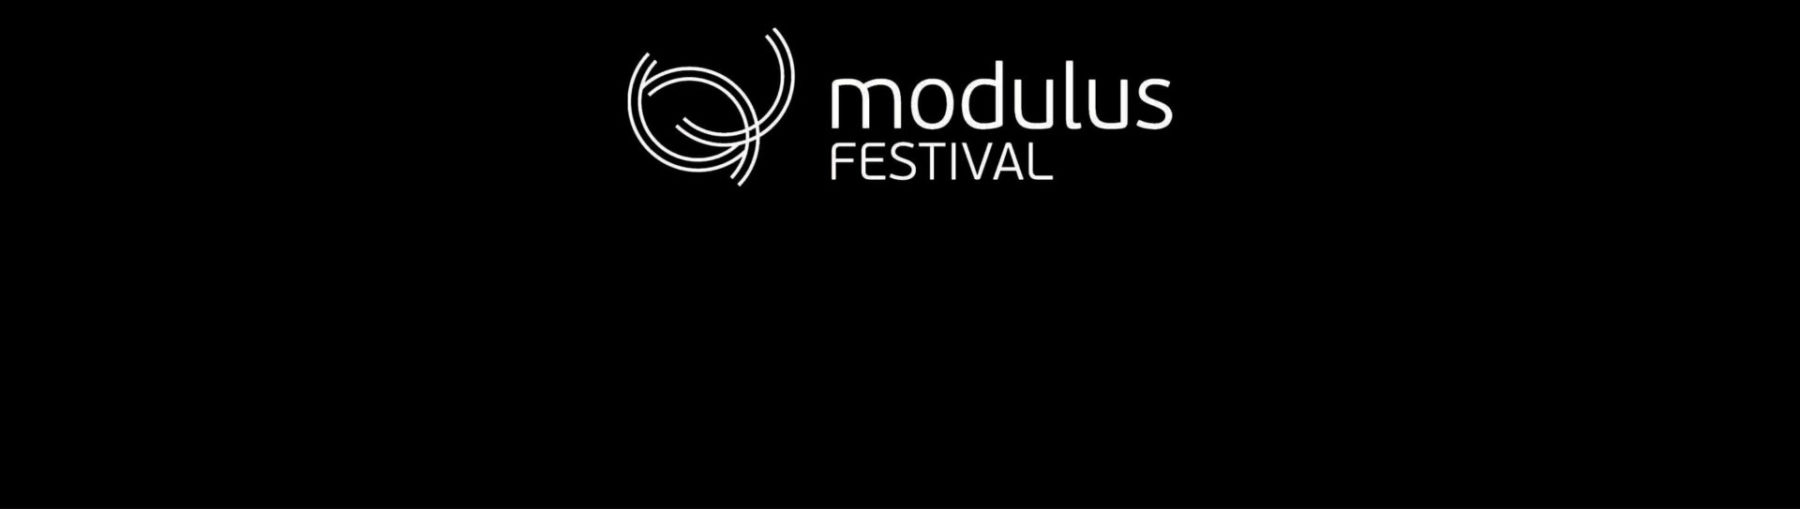 Modulus Festival logo